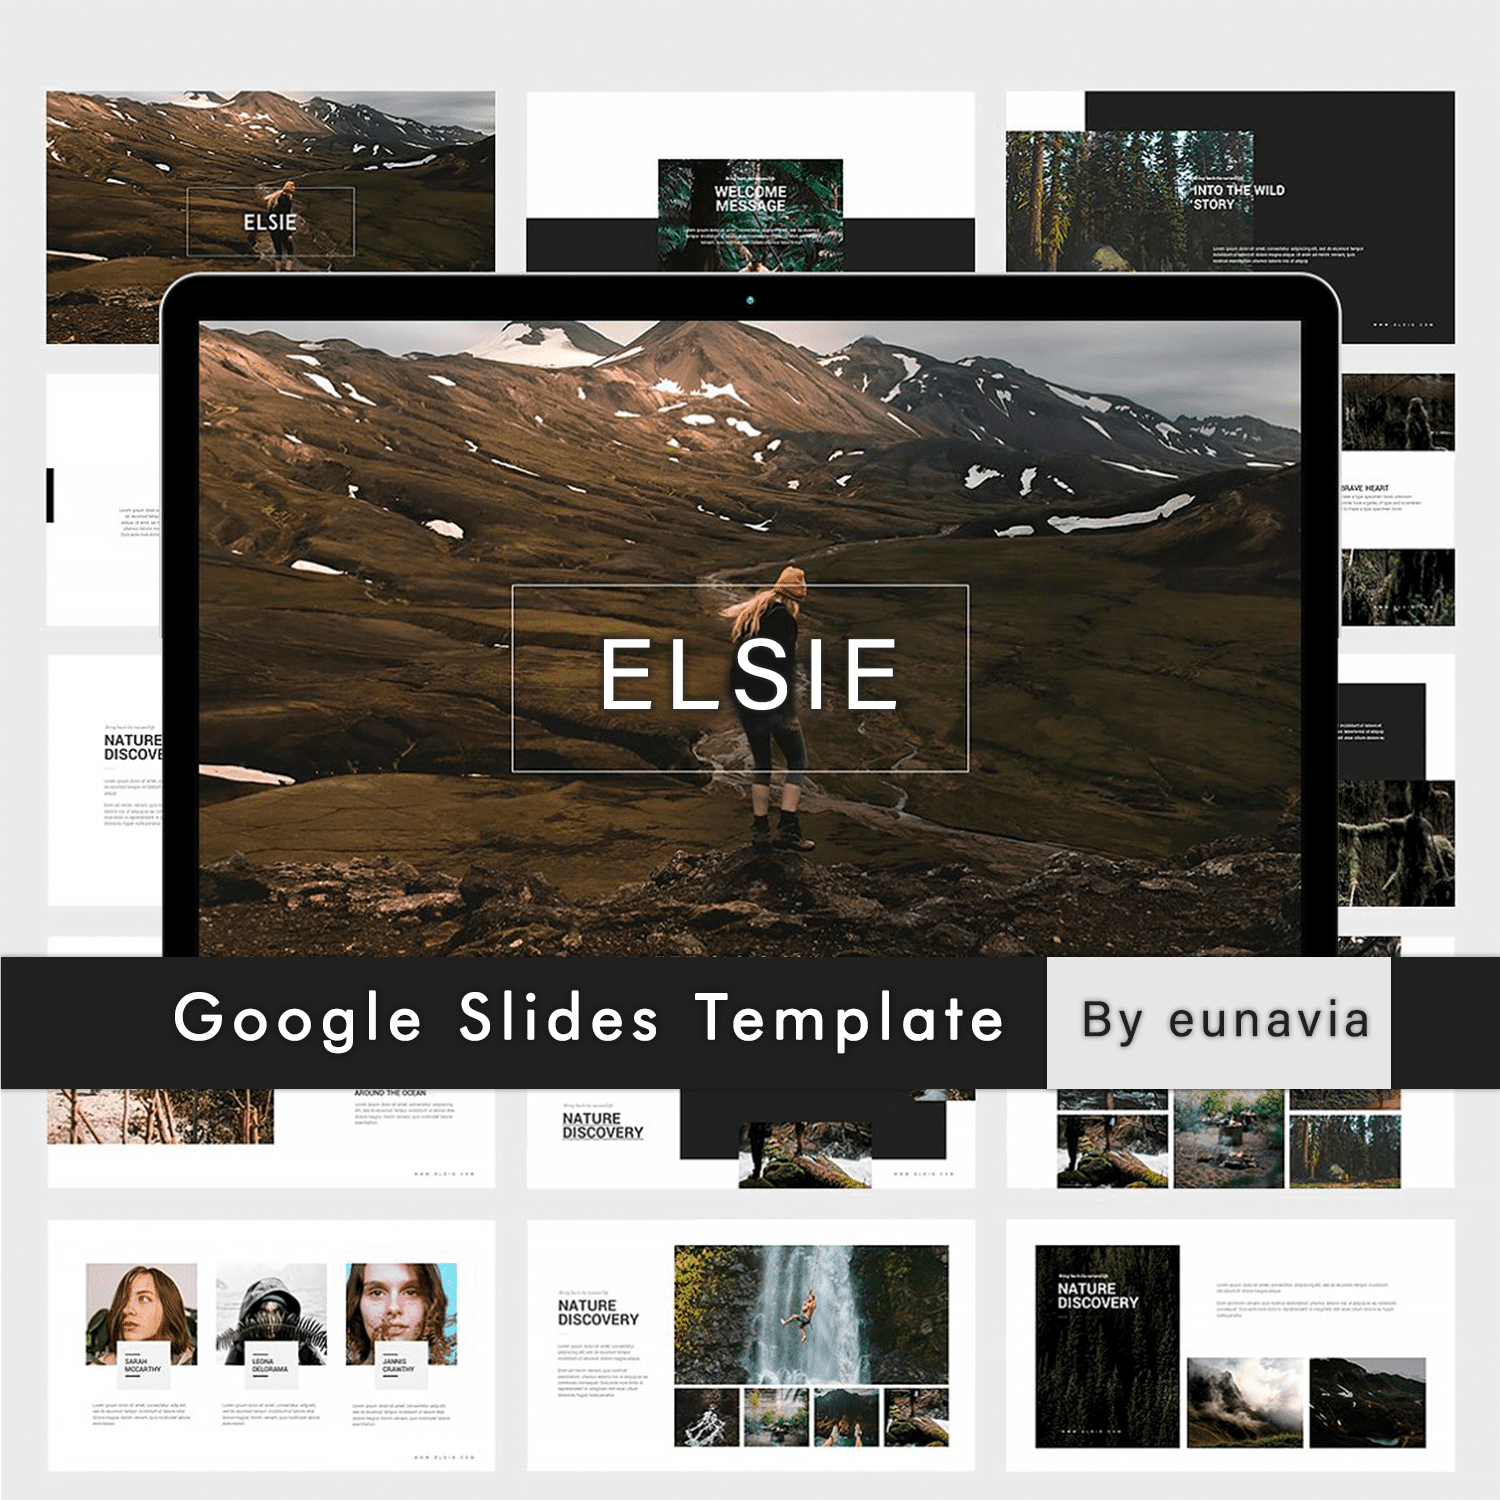 Various Slides of Elsie Google Slides Template.